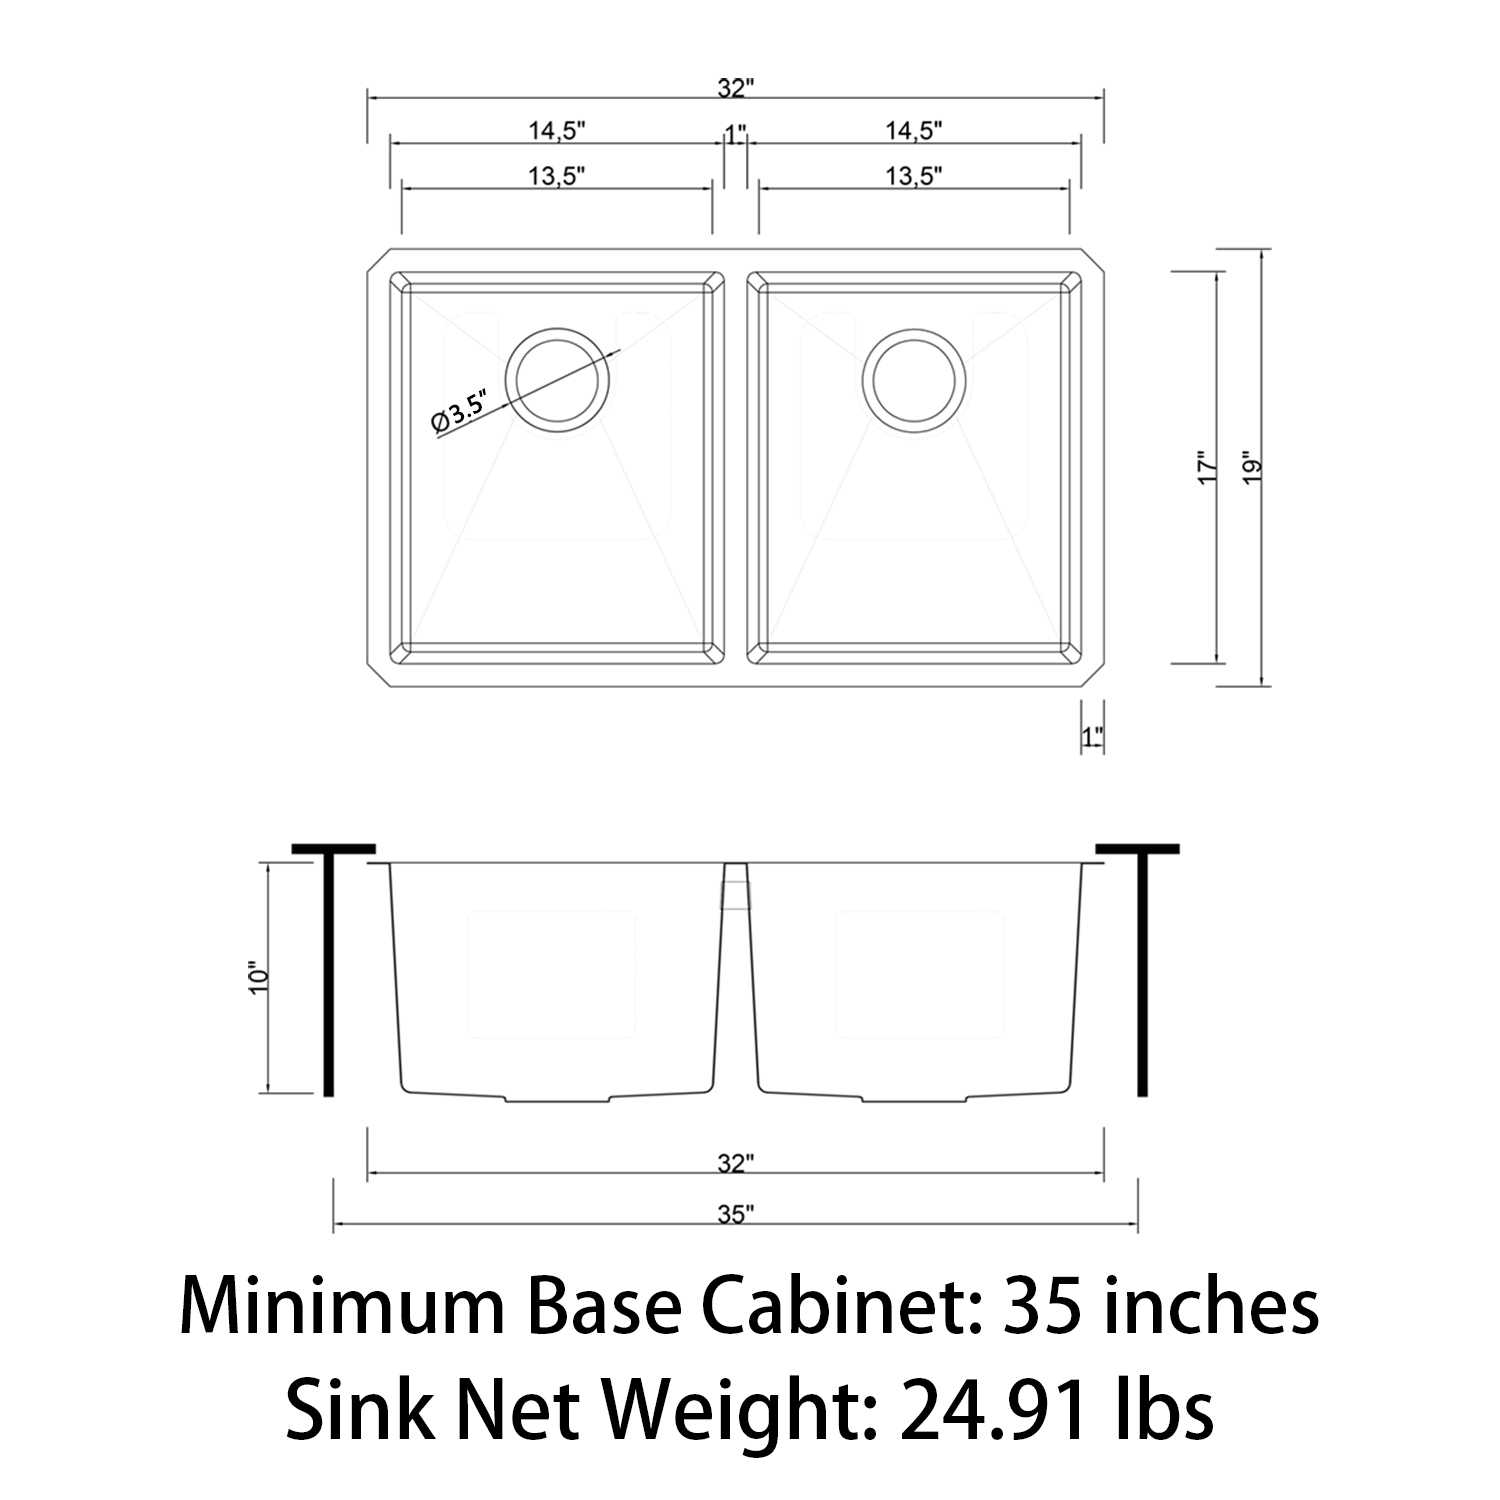 HU3219D-S 32" Undermount 18 Gauge Double Bowl 304 Stainless Steel Kitchen Sink